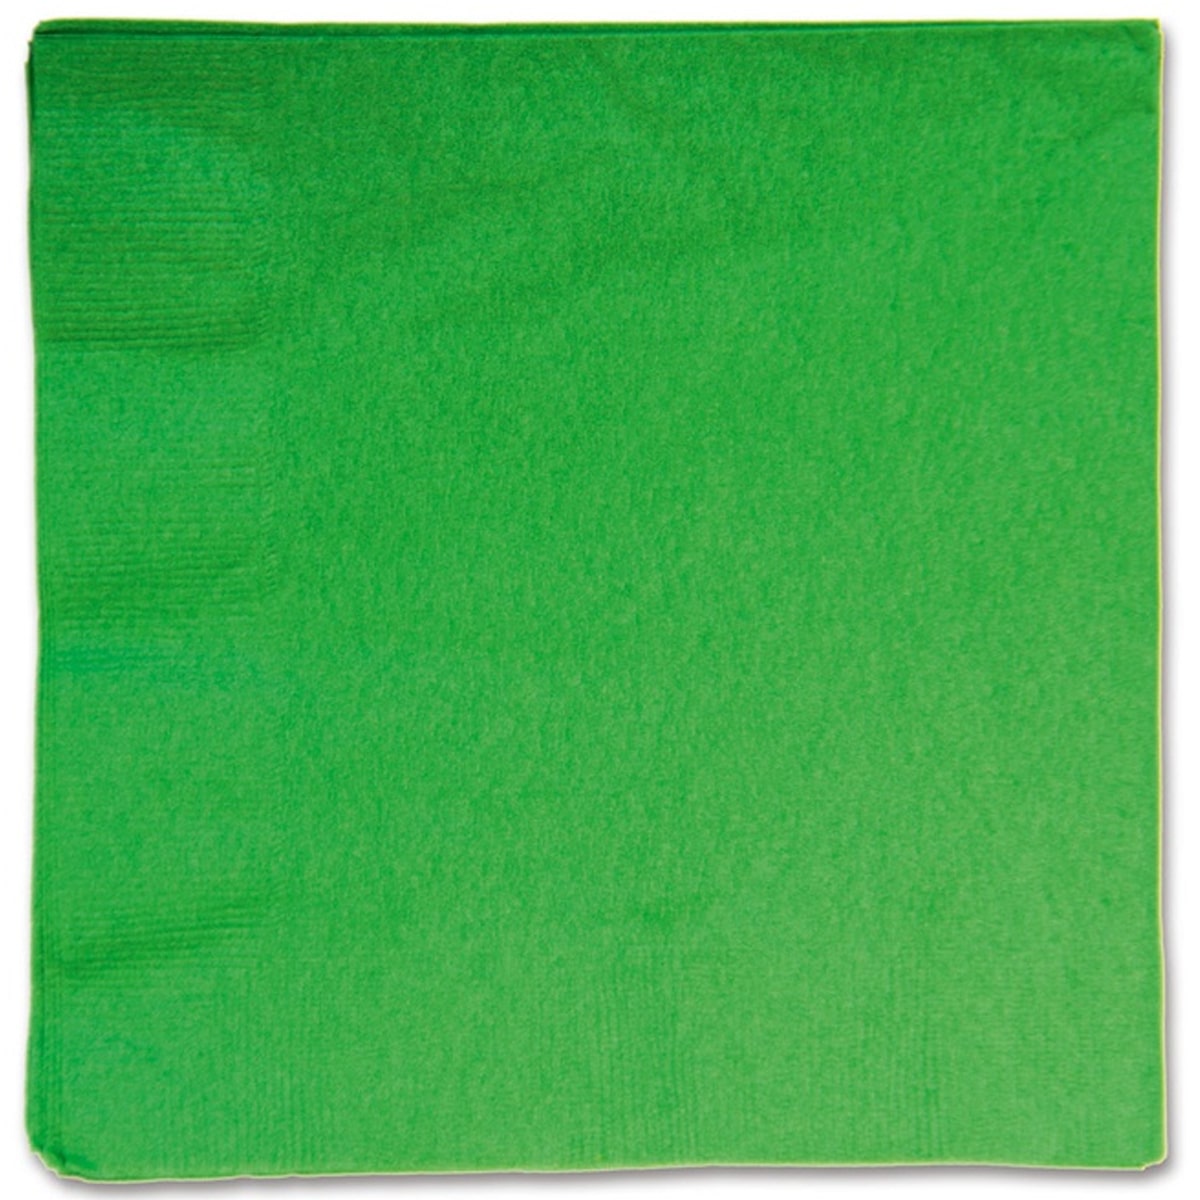 1502-1097 Салфетка Festive Green 33см 16шт/А